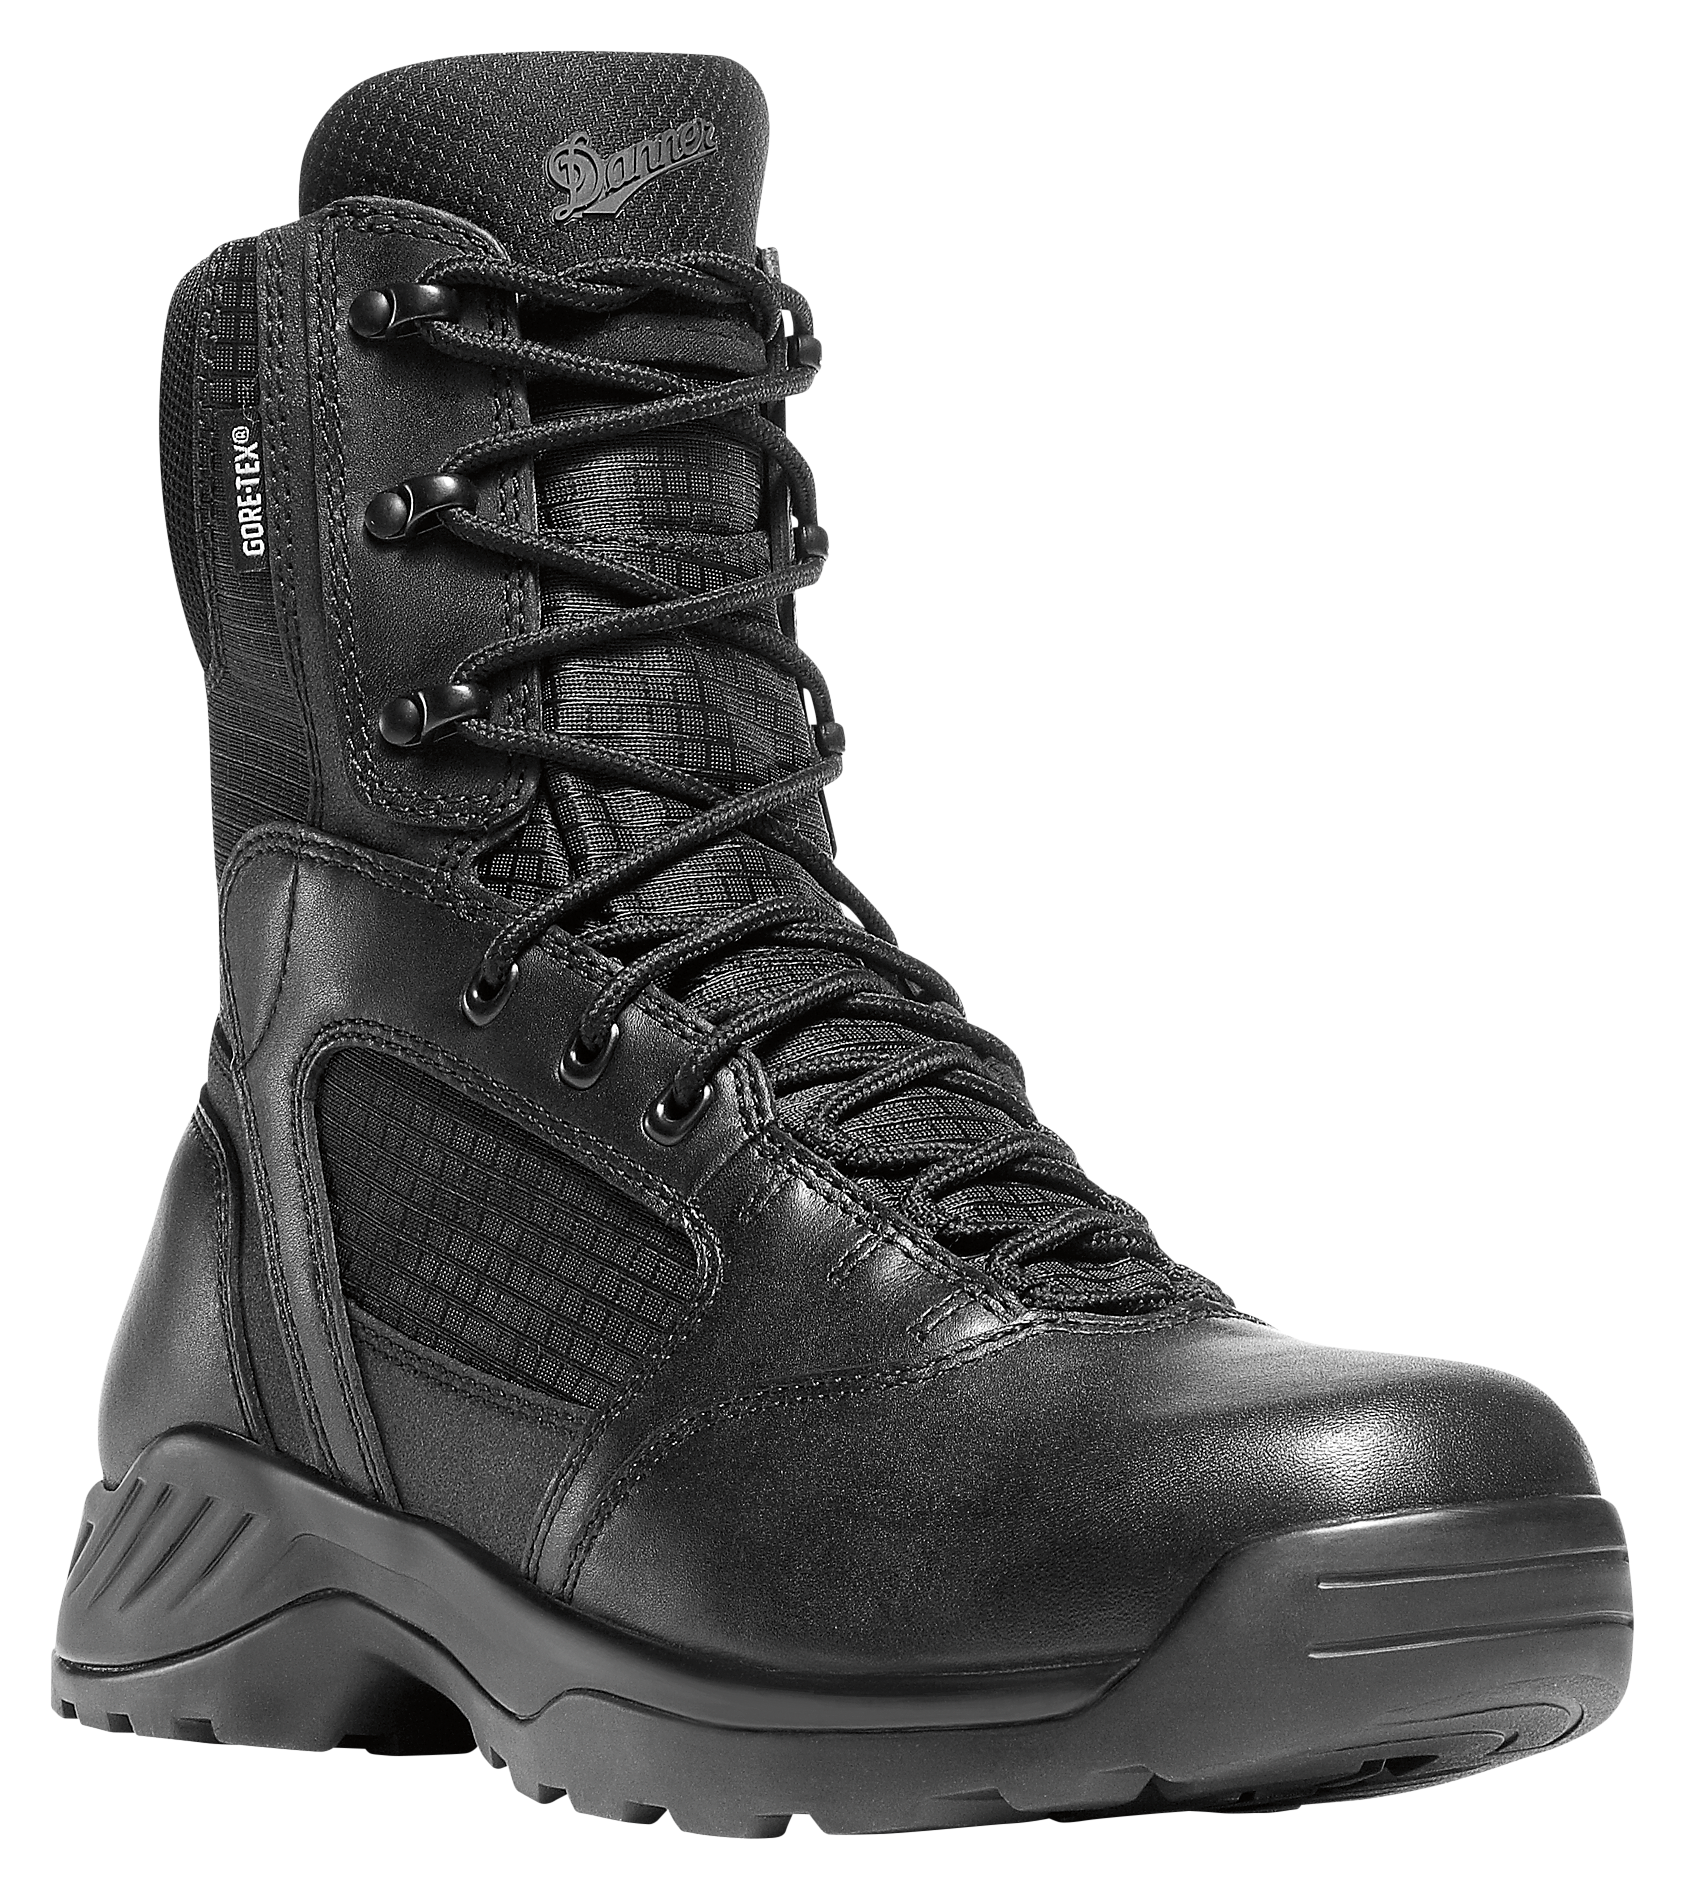 Danner Kinetic GTX Side-Zip Waterproof Tactical Duty Boots for Men - Black - 13M